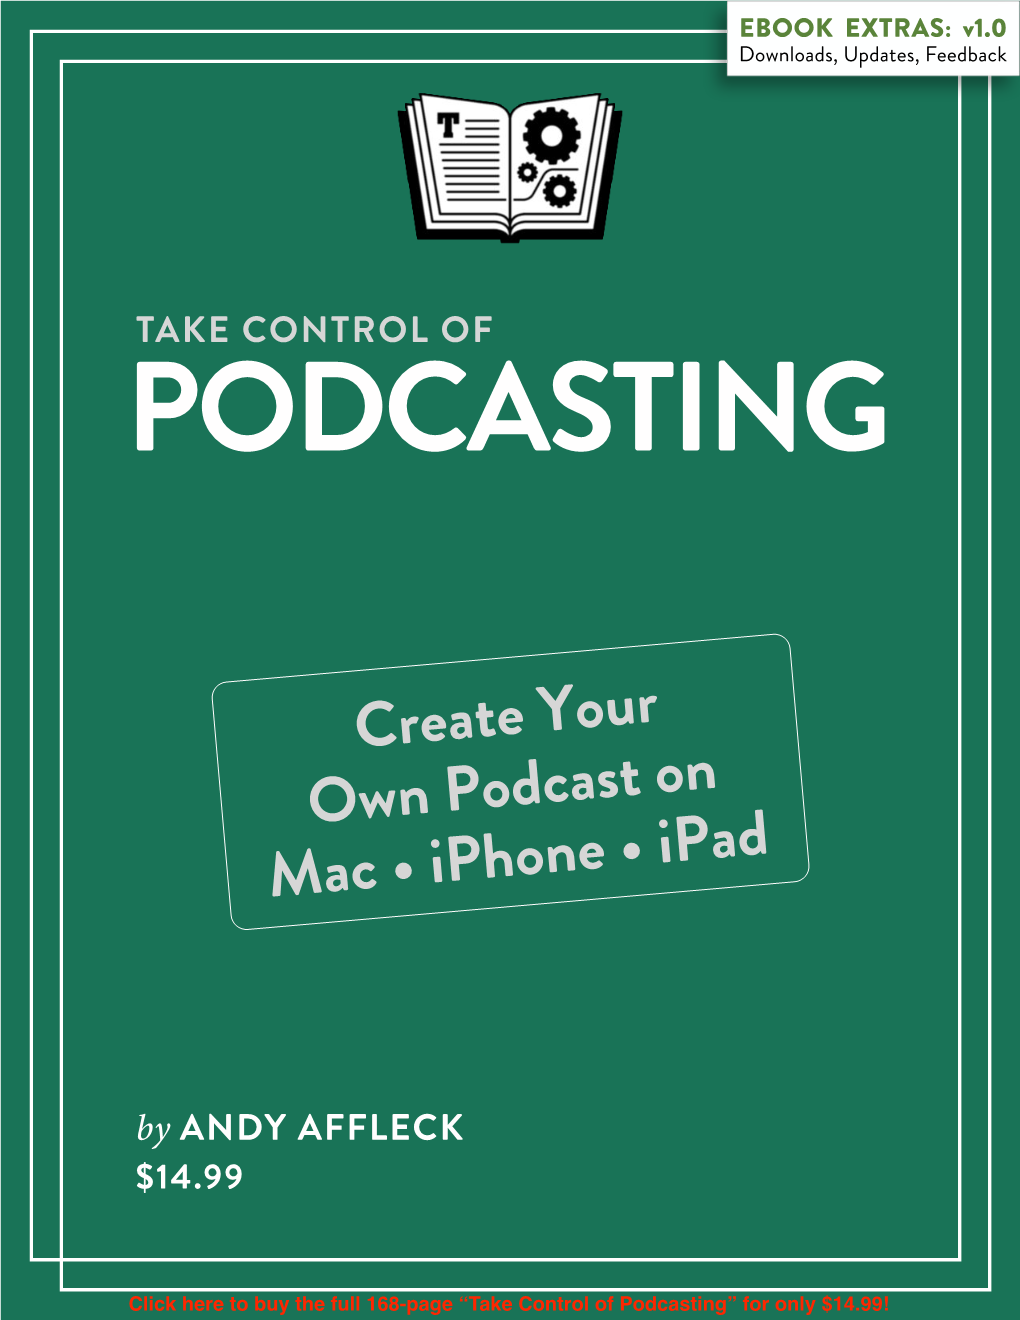 Take Control of Podcasting (1.0) SAMPLE